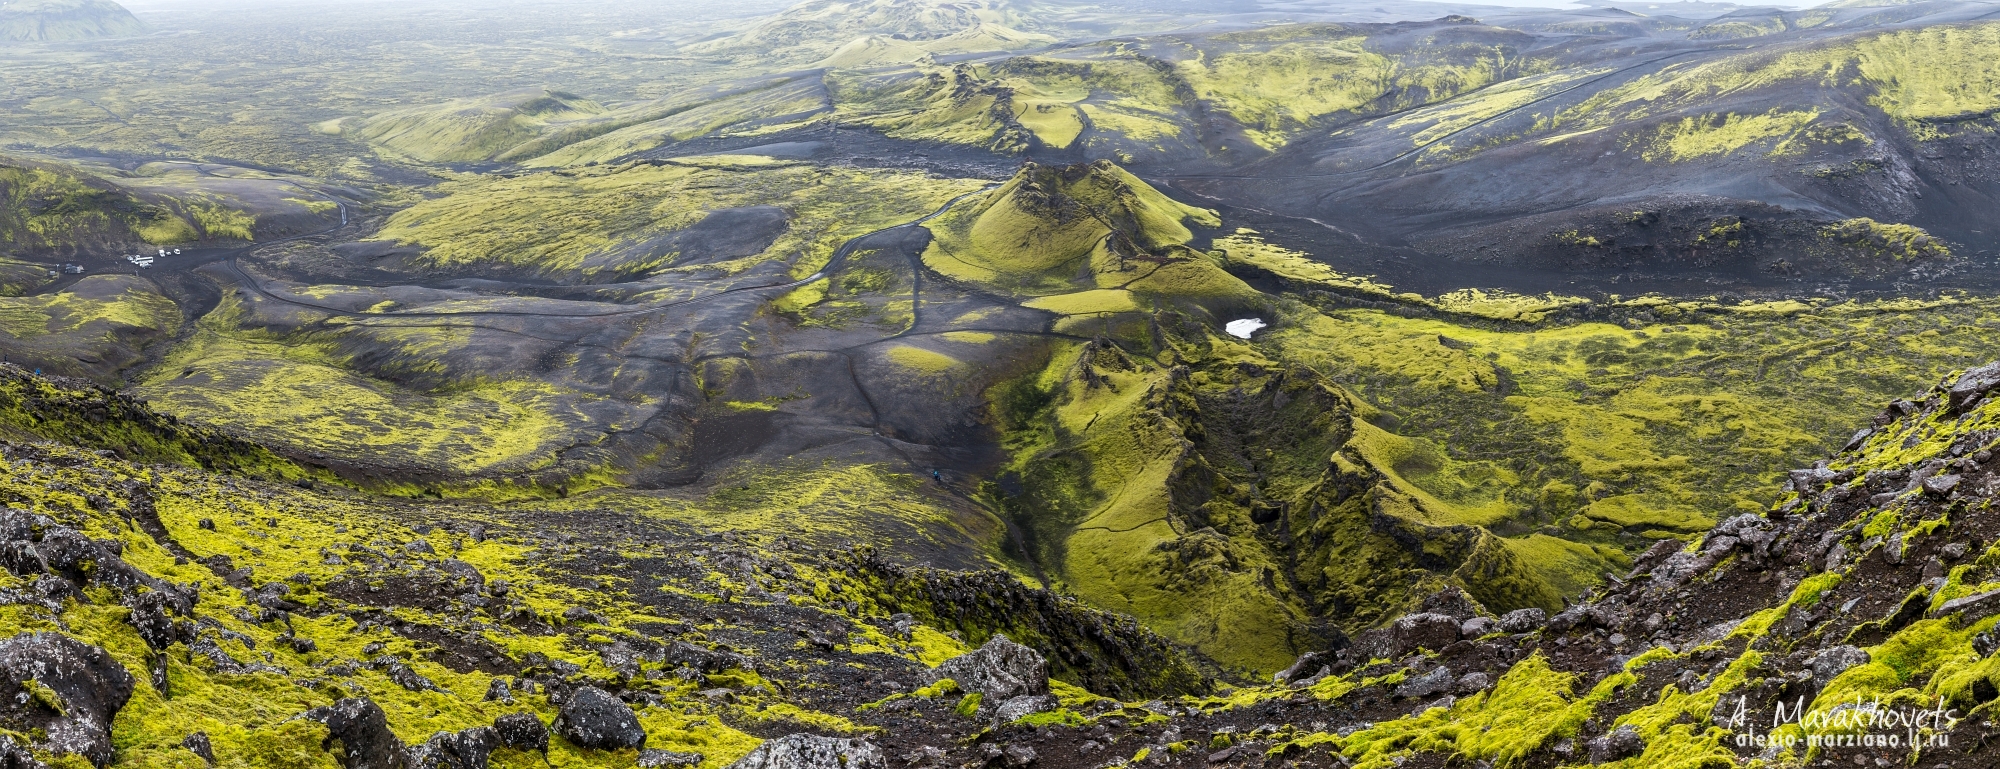 Iceland, Laki, Лаки, Исландия, вулканы